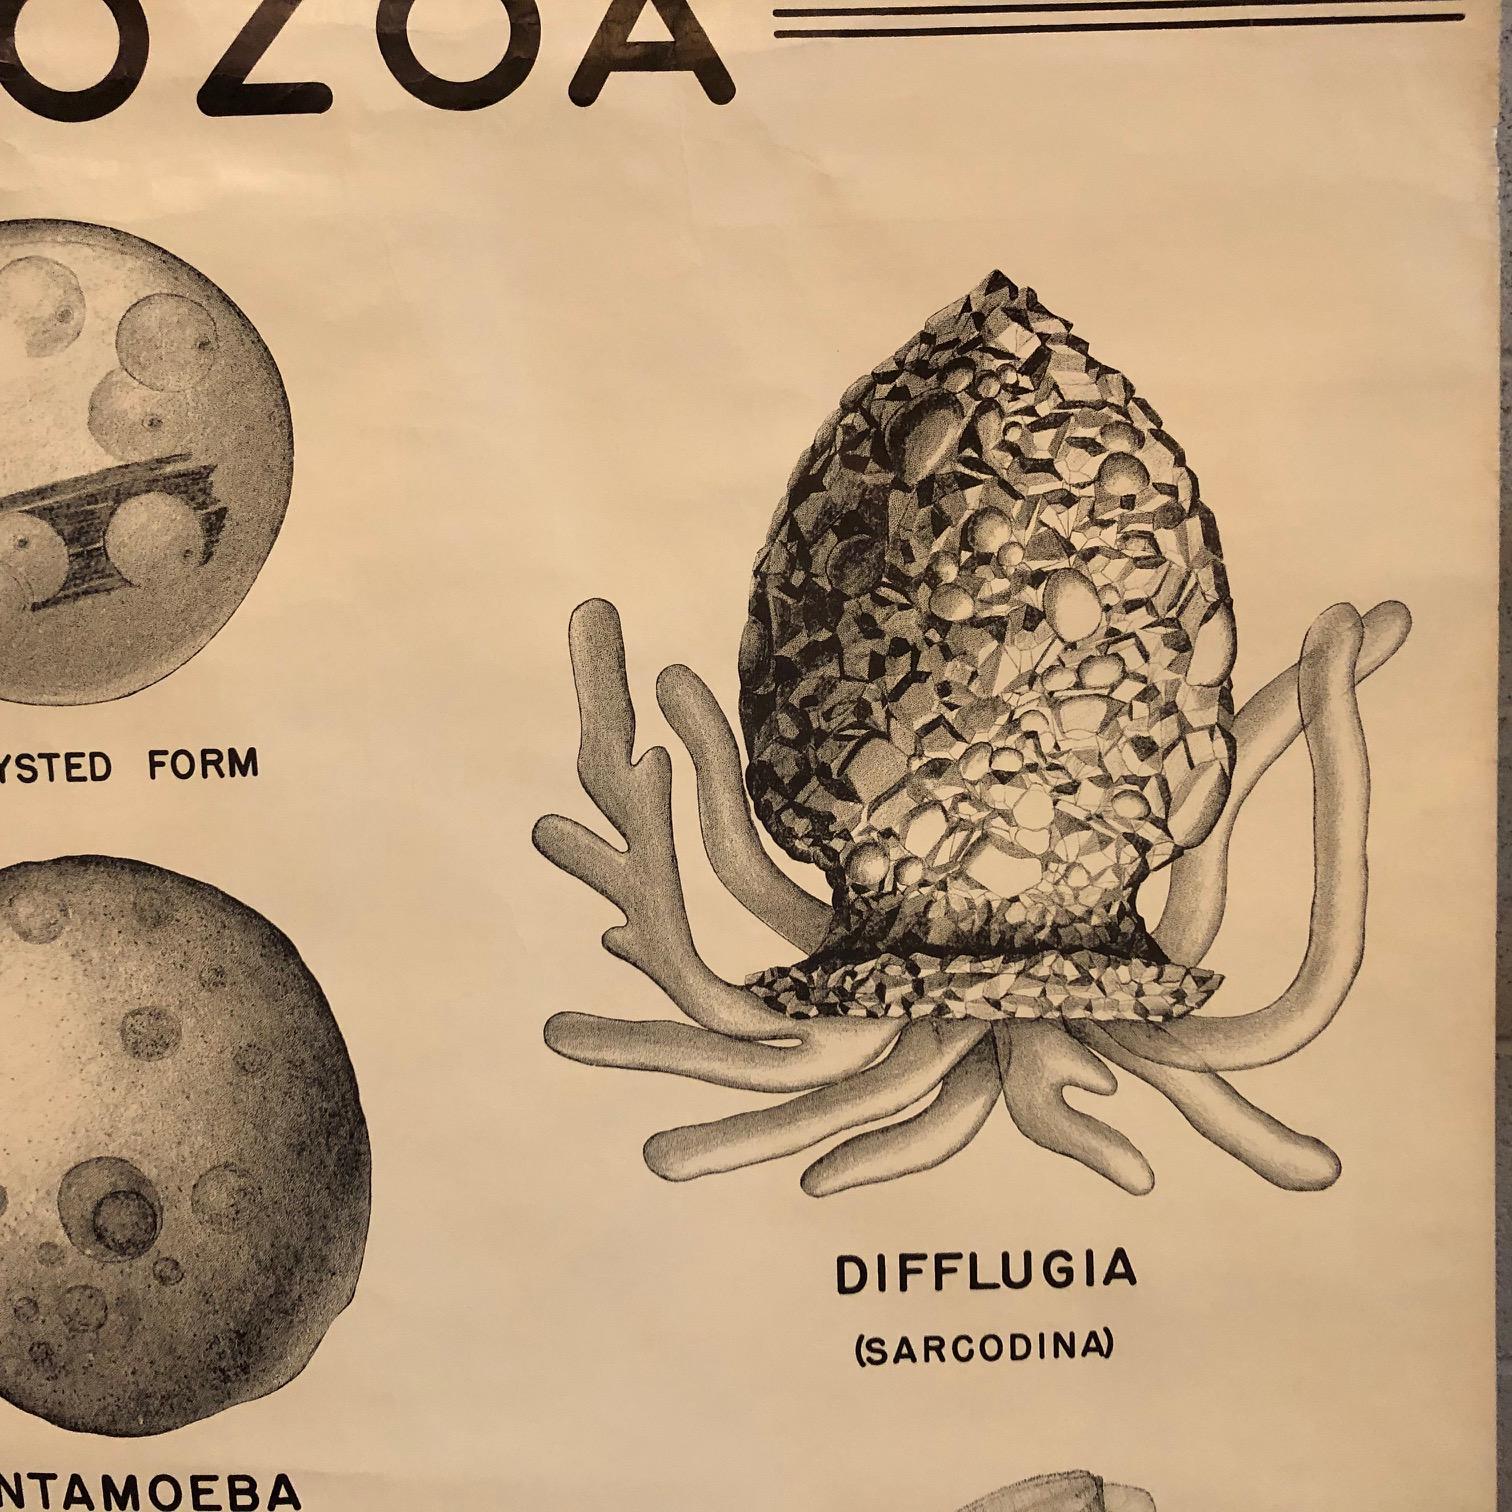 protozoa anatomy